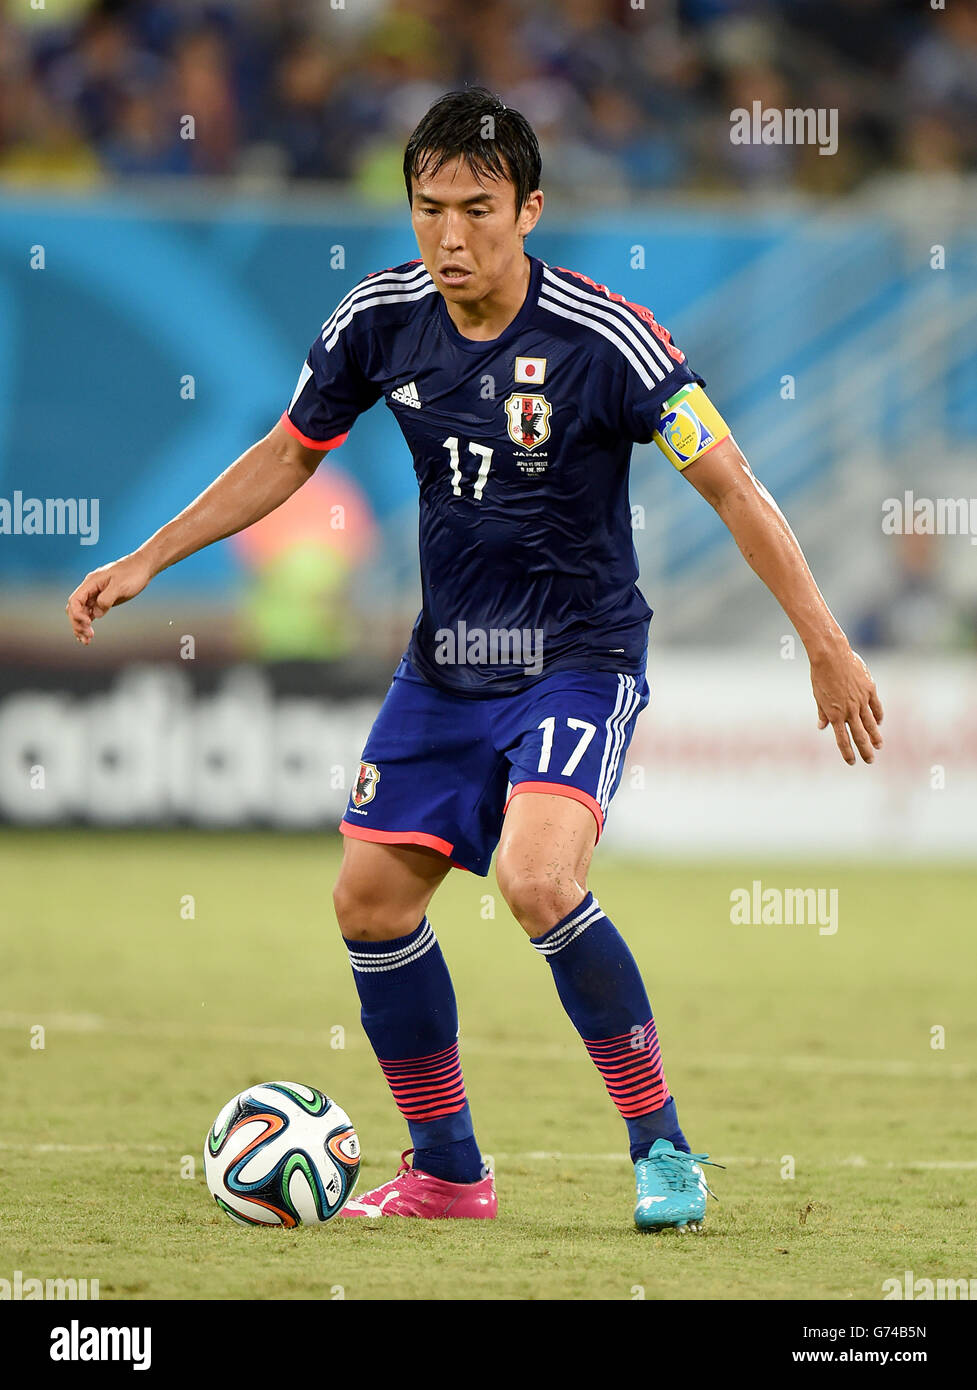 Soccer - FIFA World Cup 2014 - Group C - Japan v Greece - Estadio das Dunas. Makoto Hasebe, Japan Stock Photo